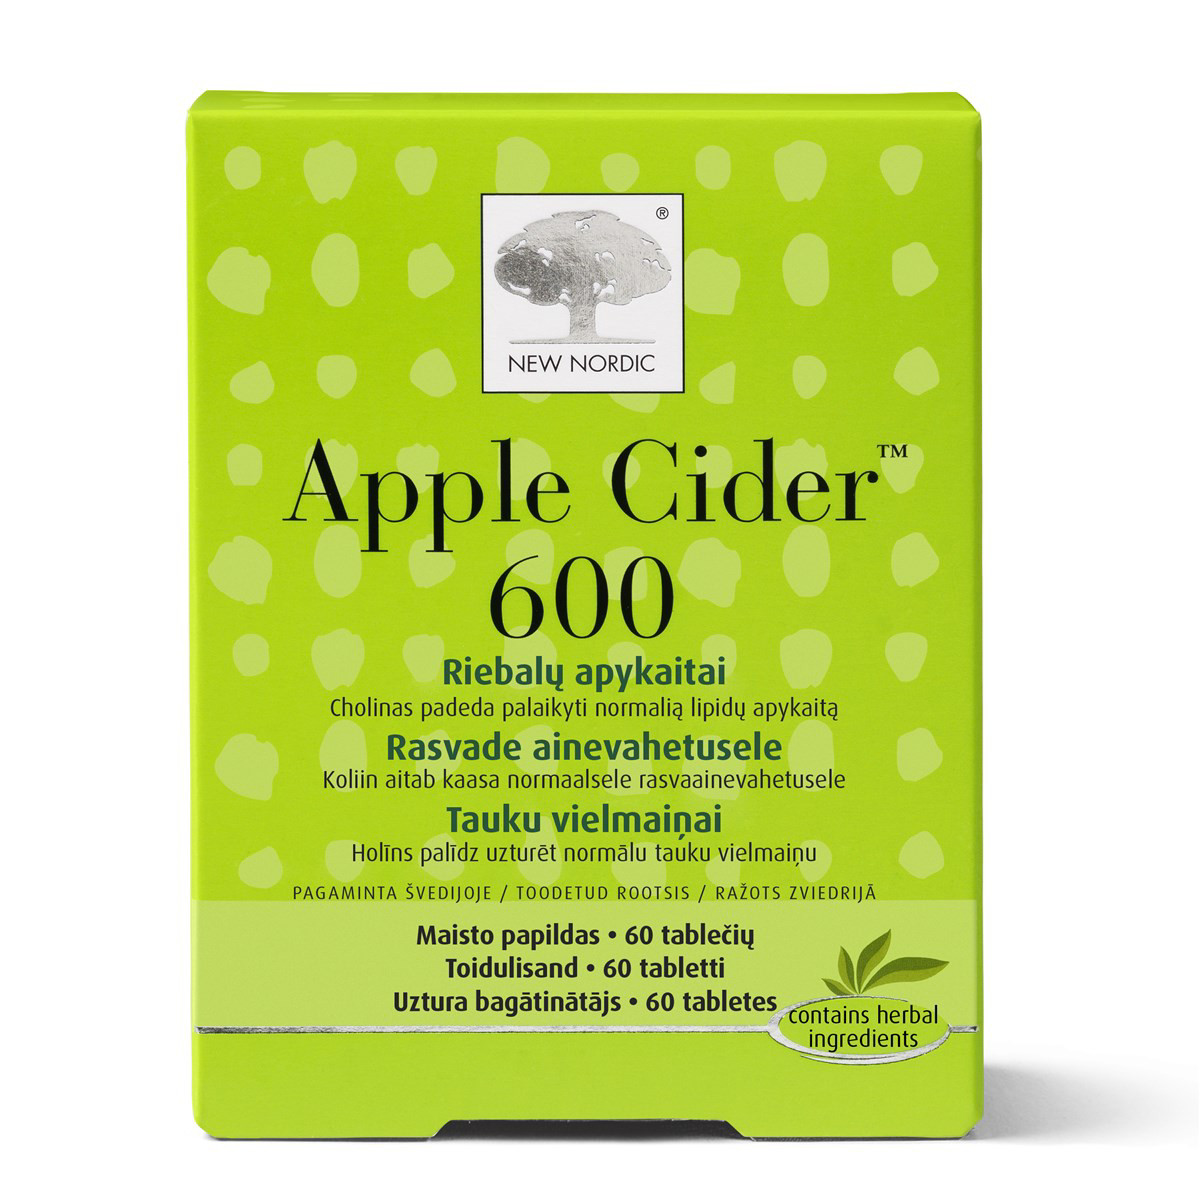 NEW NORDIC APPLE CIDER 600, 60 tablečių